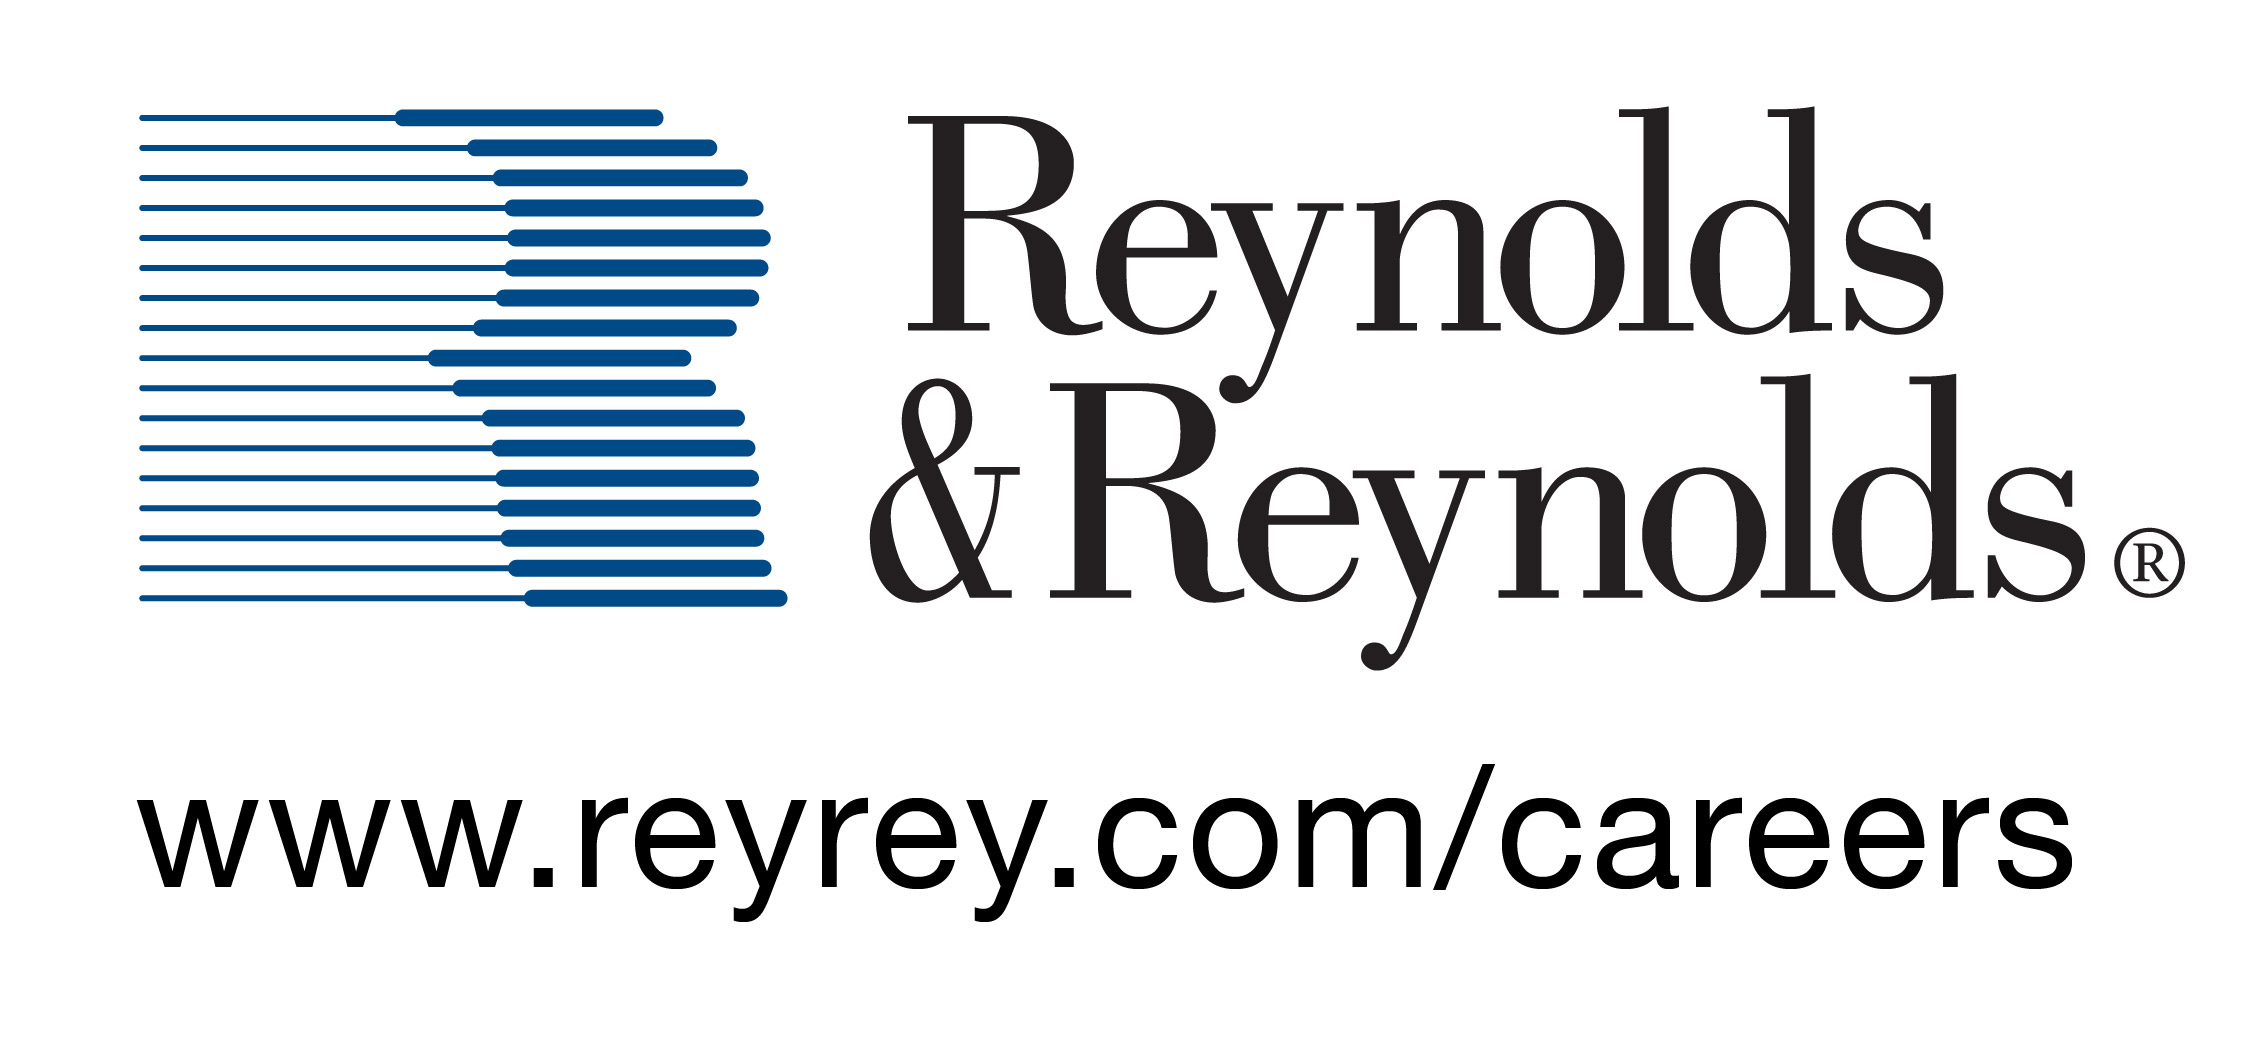 reynolds and reynolds logo